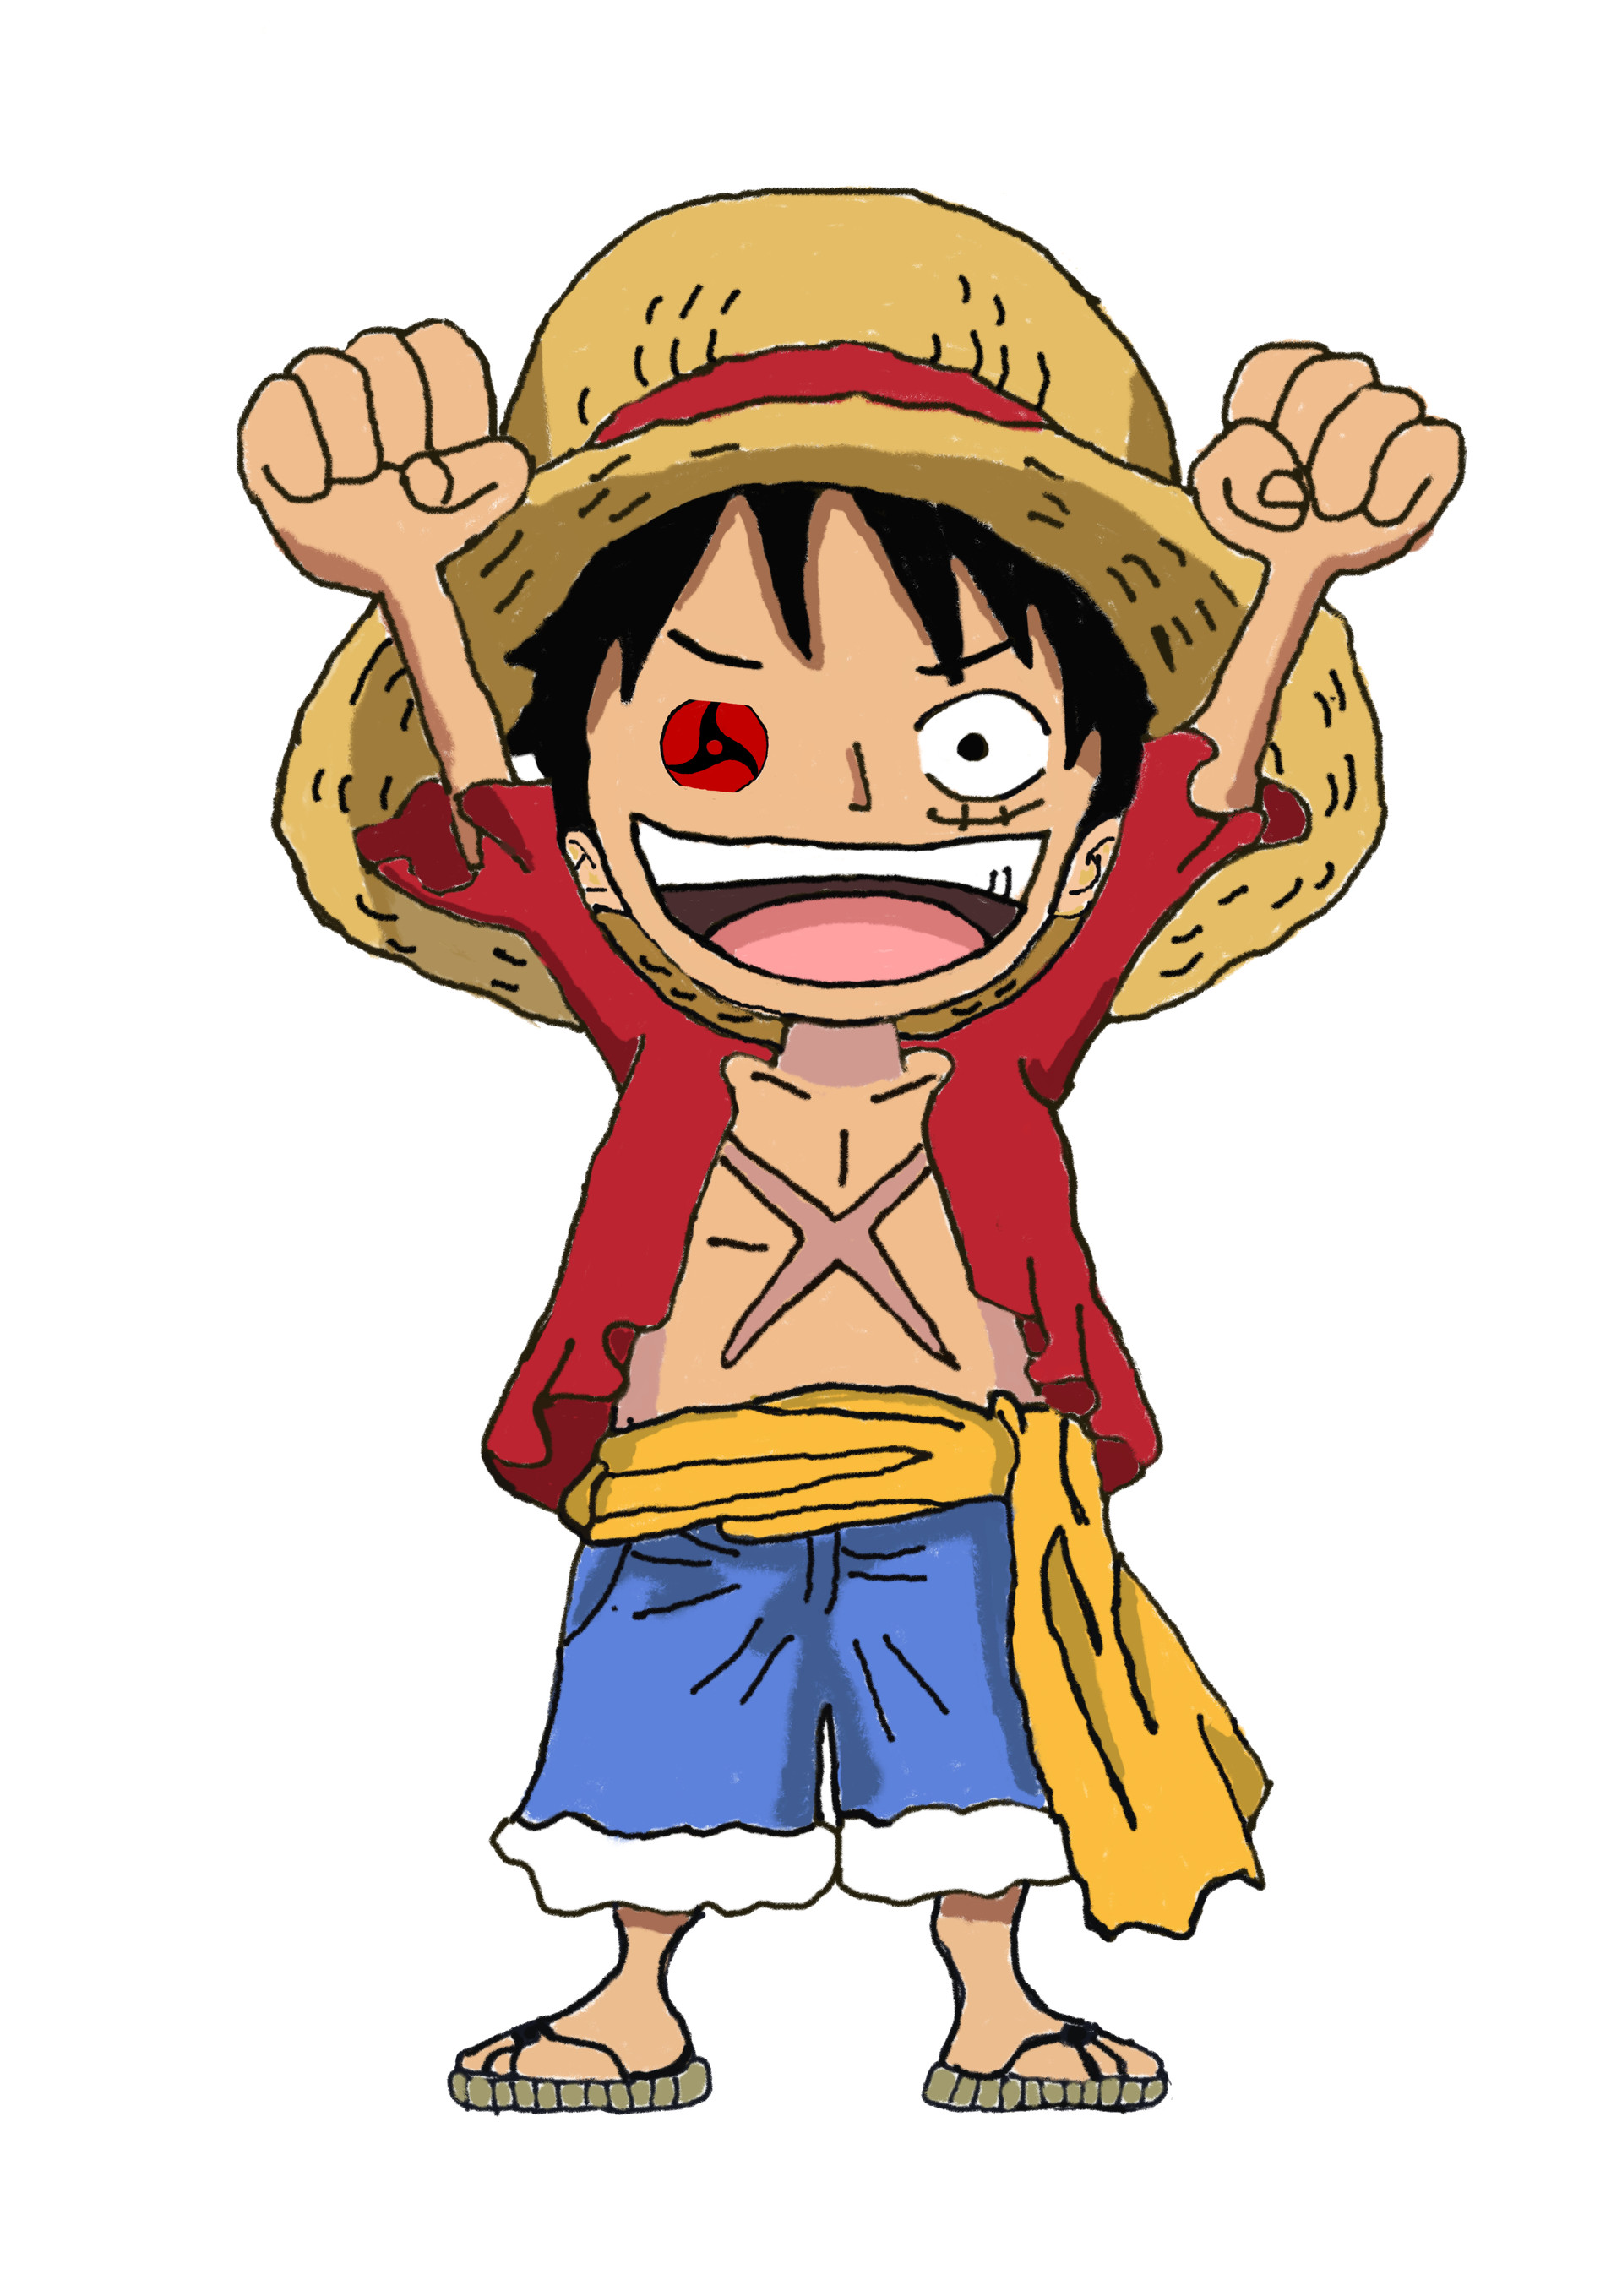 ArtStation - One Piece Luffy Drawing